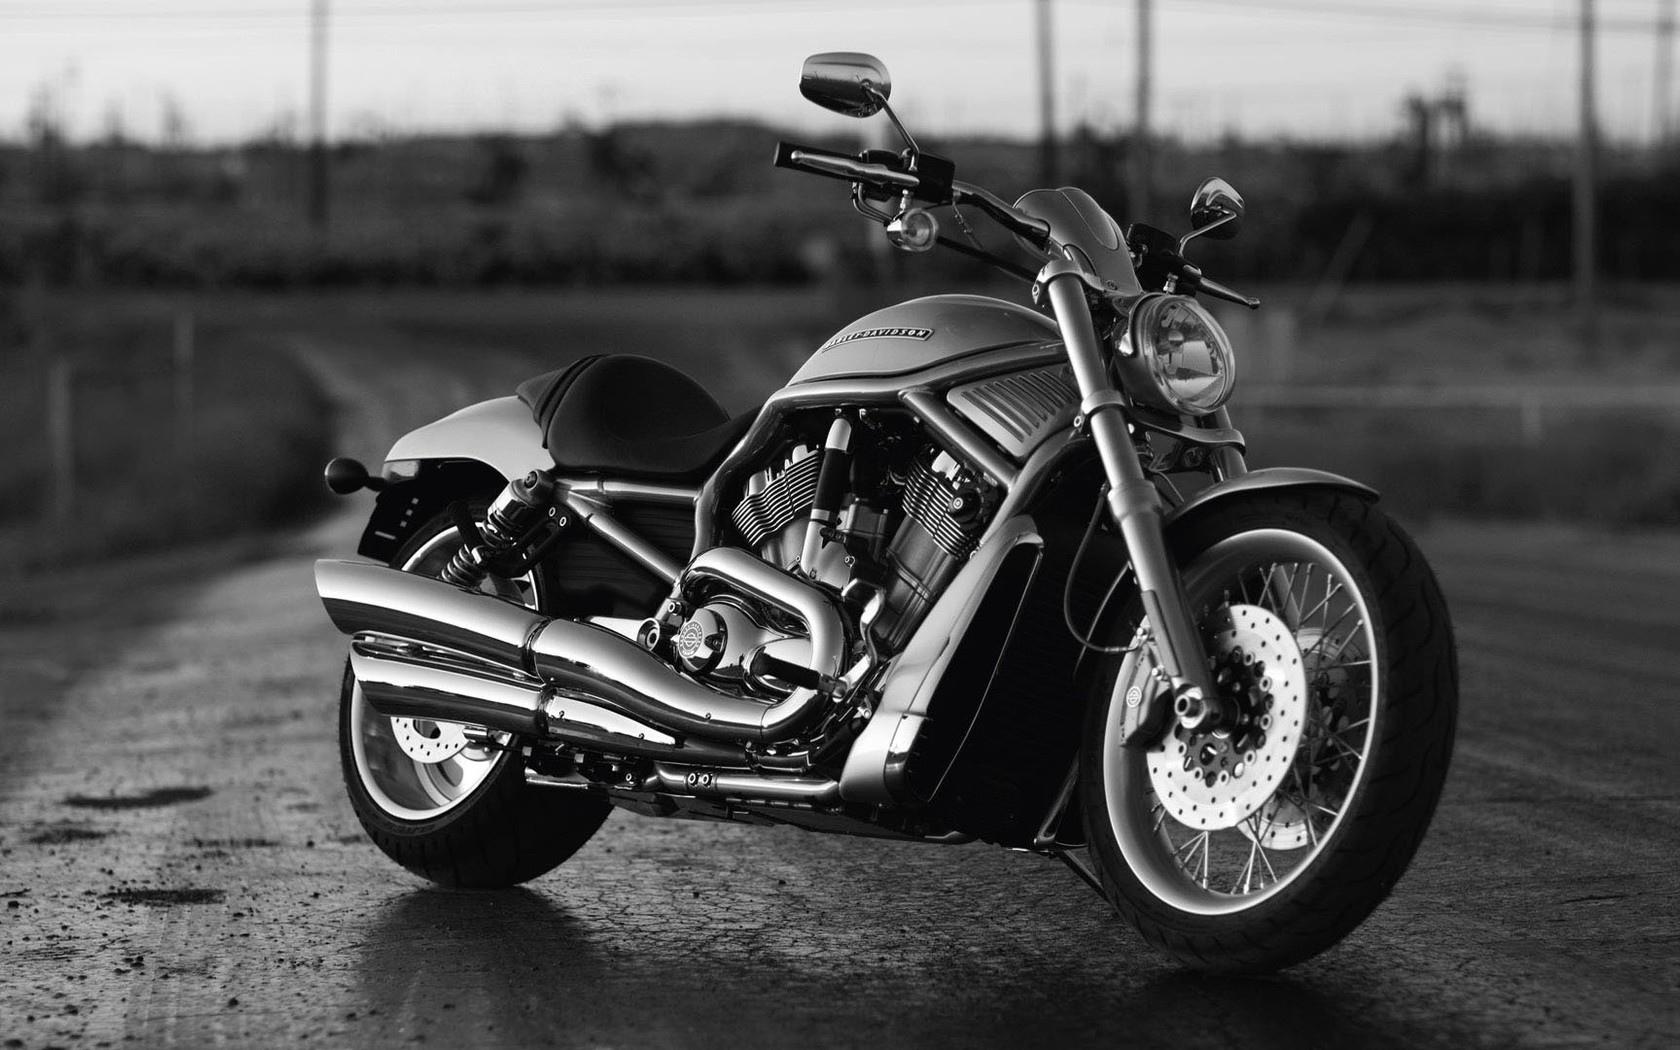 Harley-Davidson V-Rod at 2048 x 2048 iPad size wallpapers HD quality